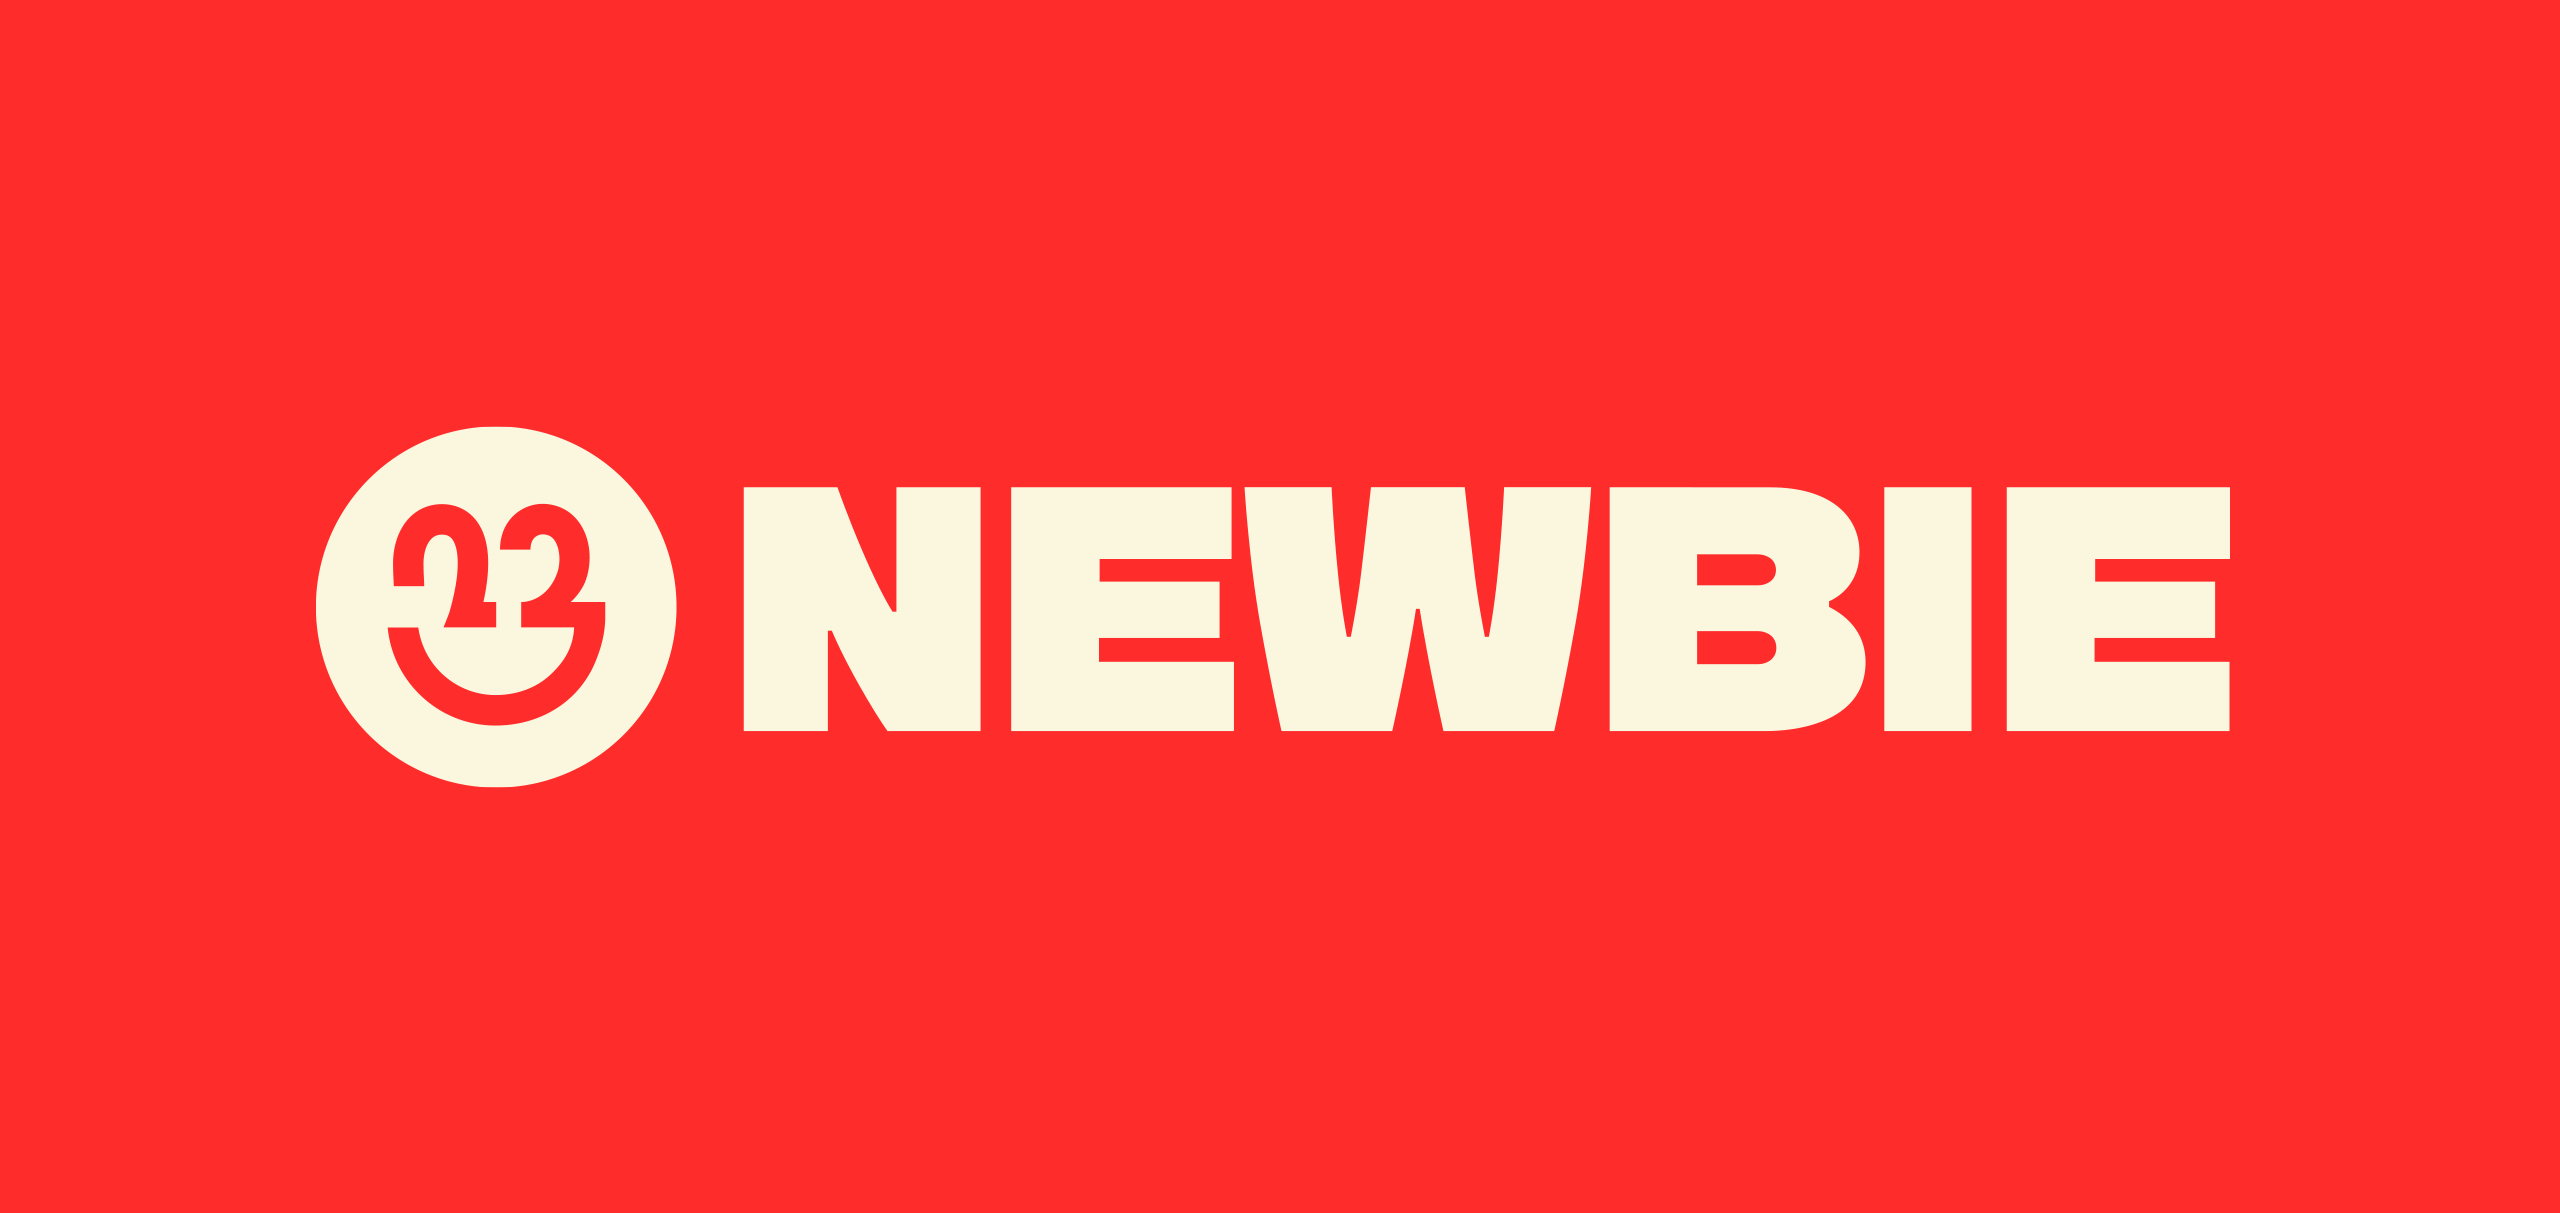 White Newbie logo on red background